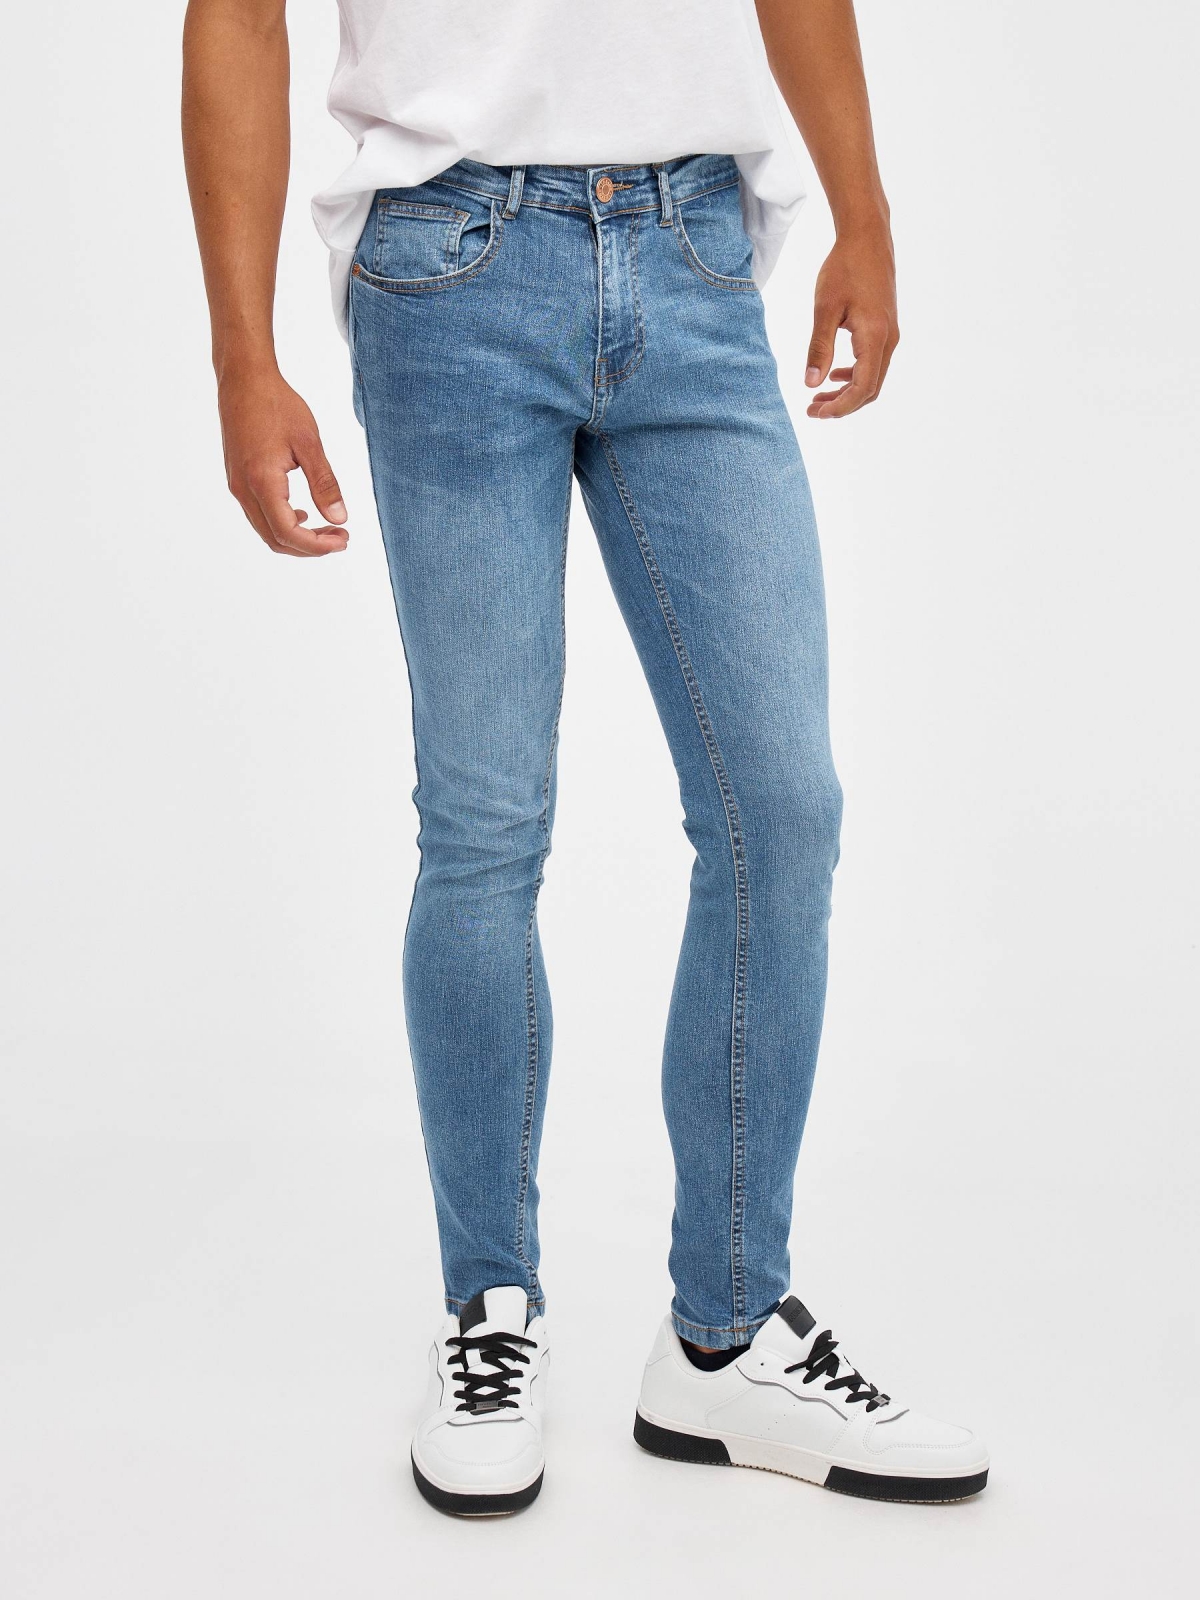 Jeans Super Slim modernos azul vista media frontal